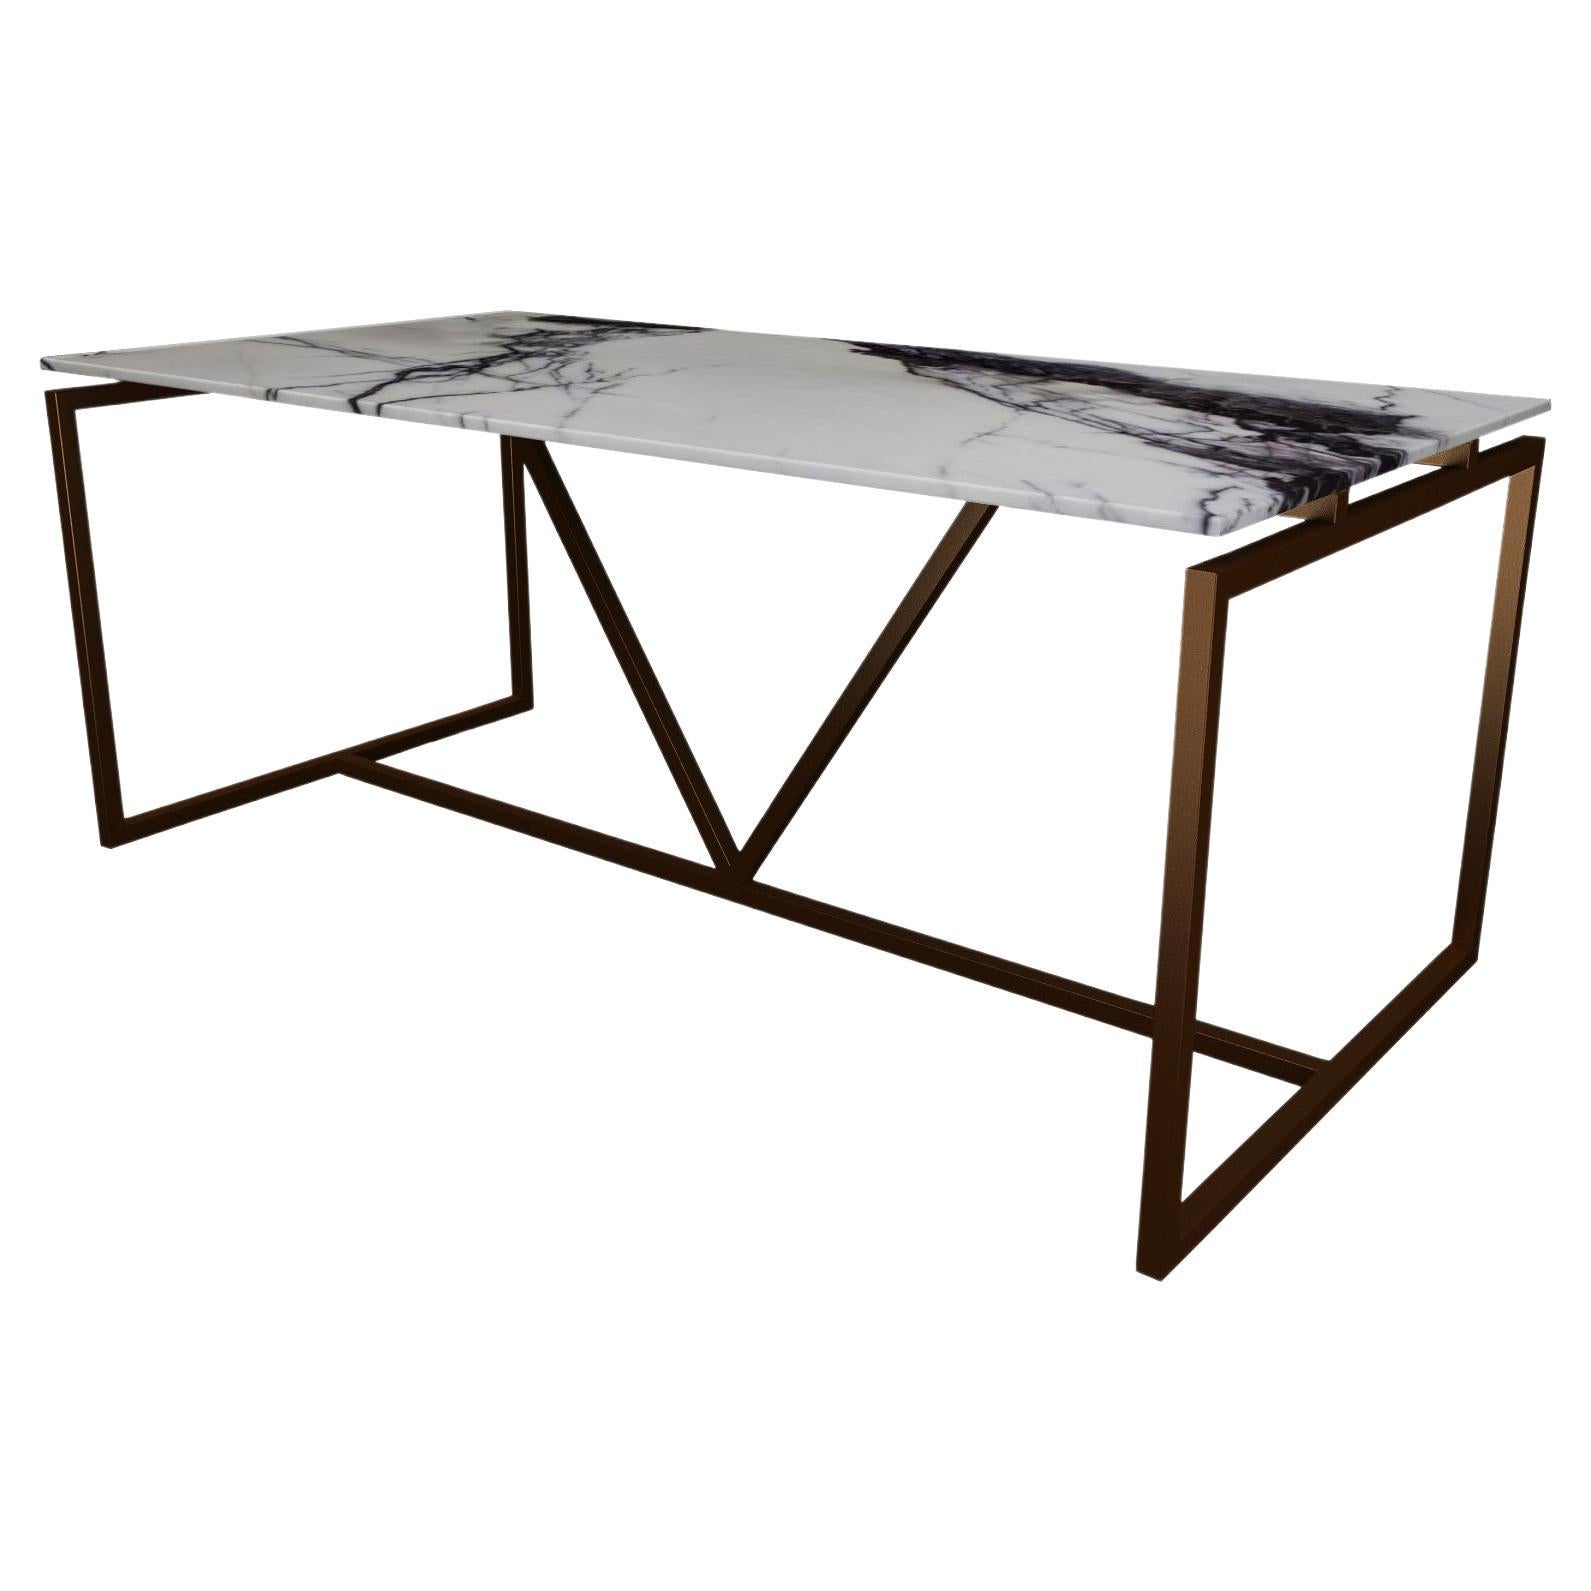 NORDST OLIVIA Dining Table, Italian White Mountain Marble, Danish Modern Design